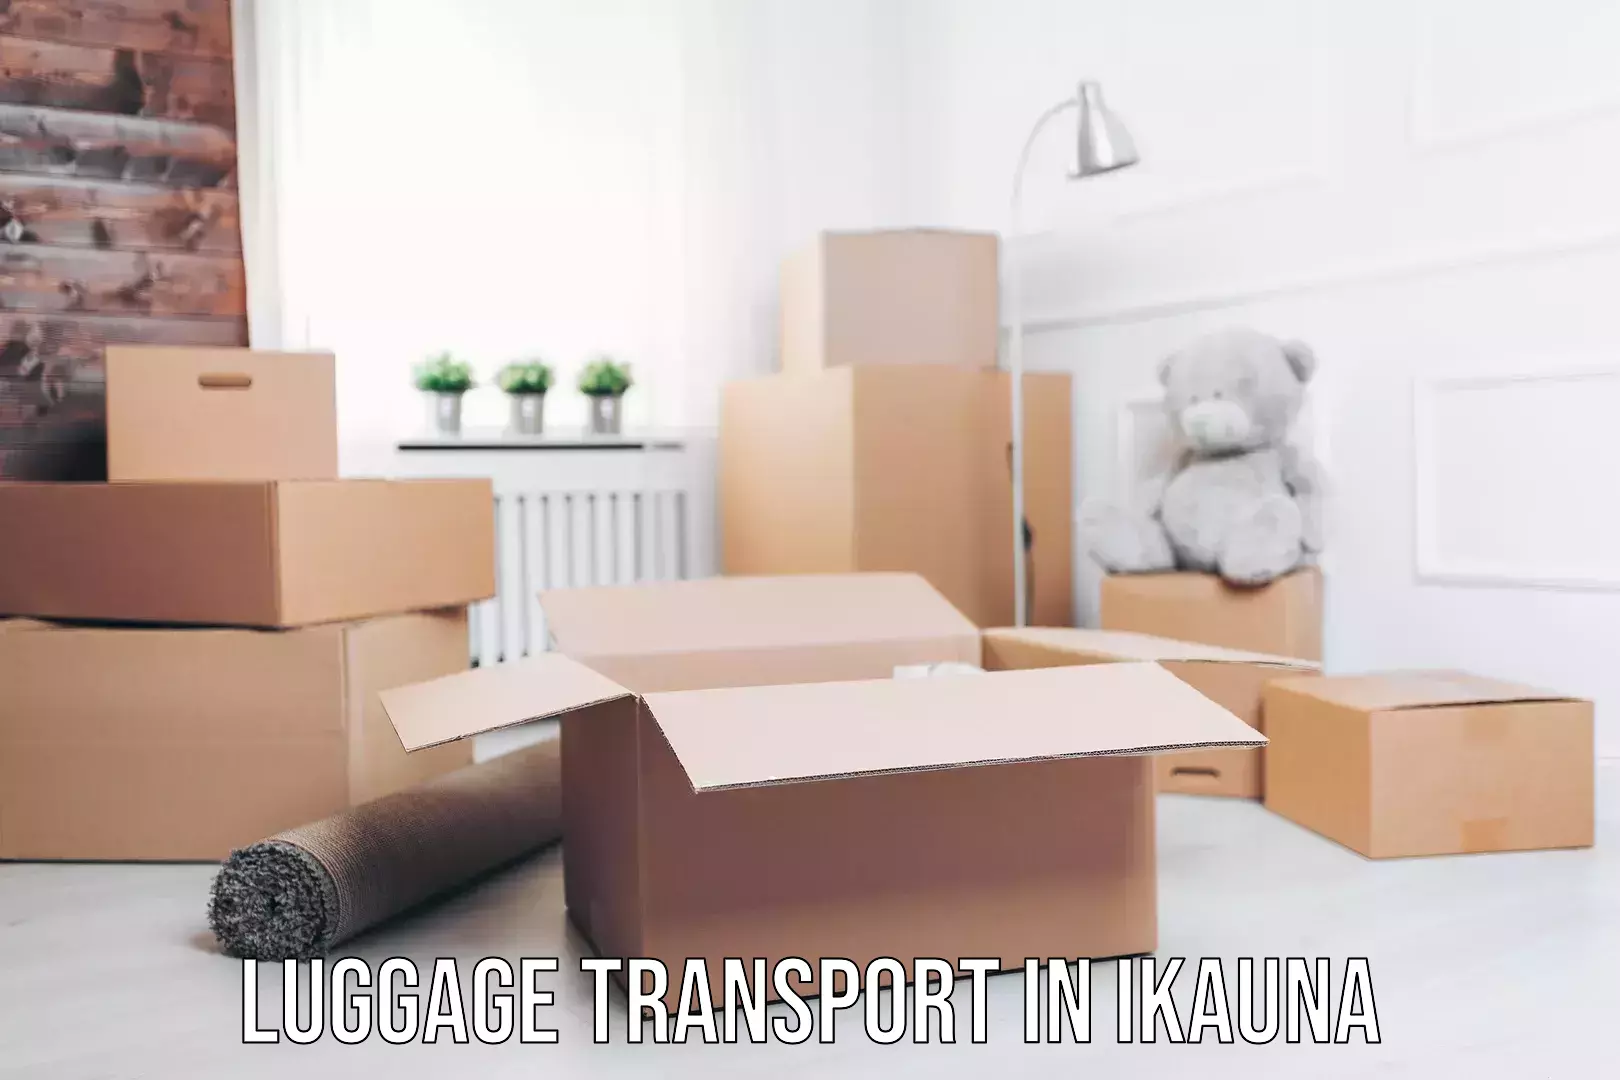 Luggage shipment tracking in Ikauna